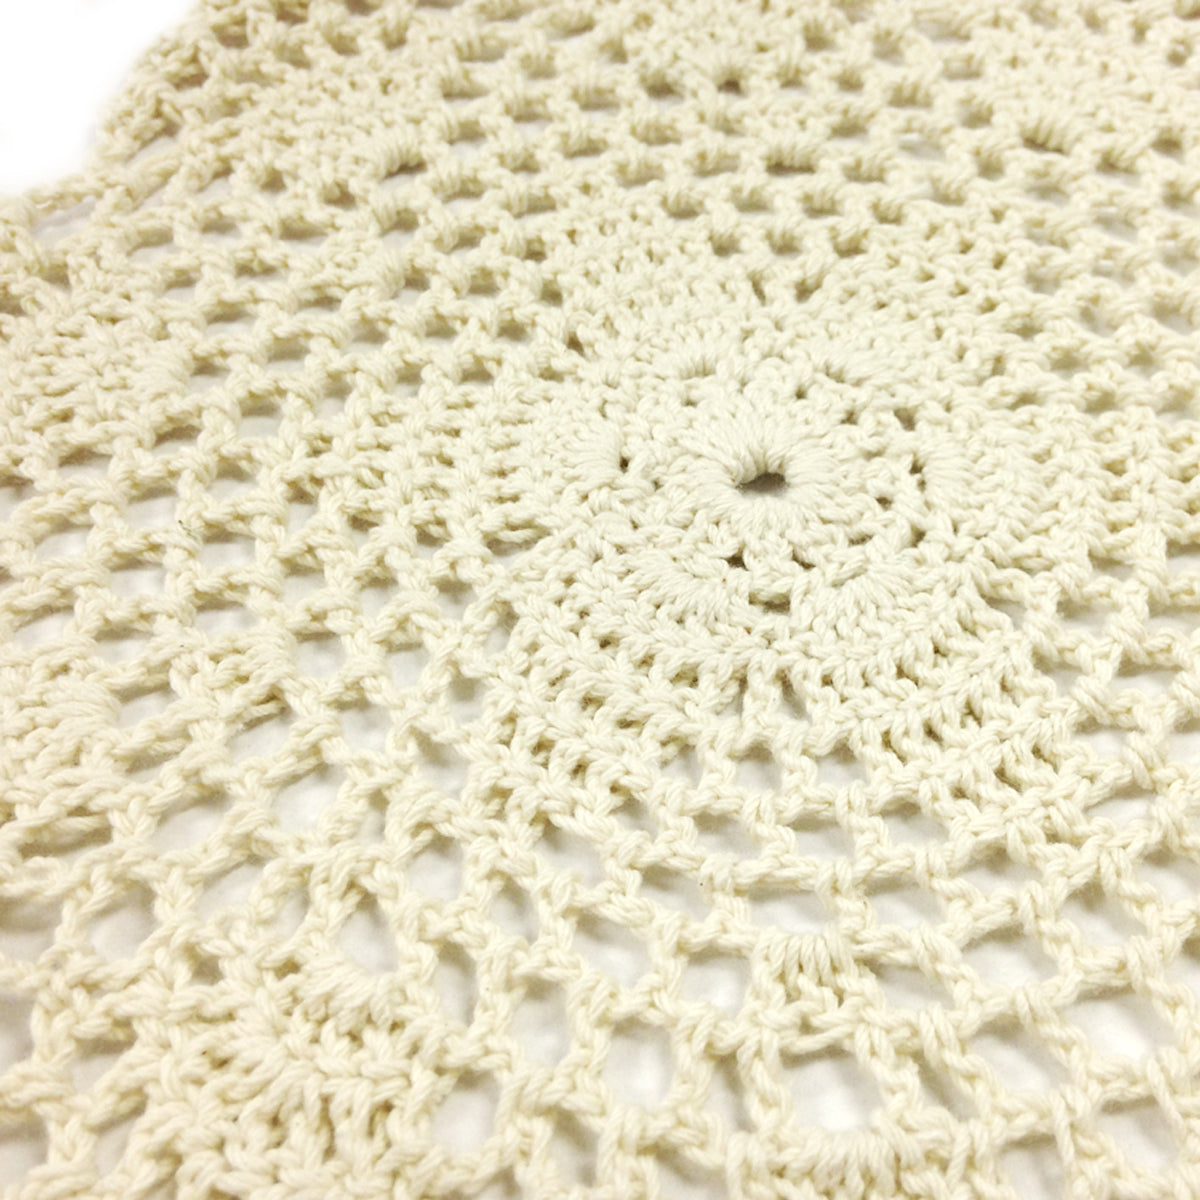 Wrapables Large Beige Round Crochet Cotton Doily Placemat, Set of 4